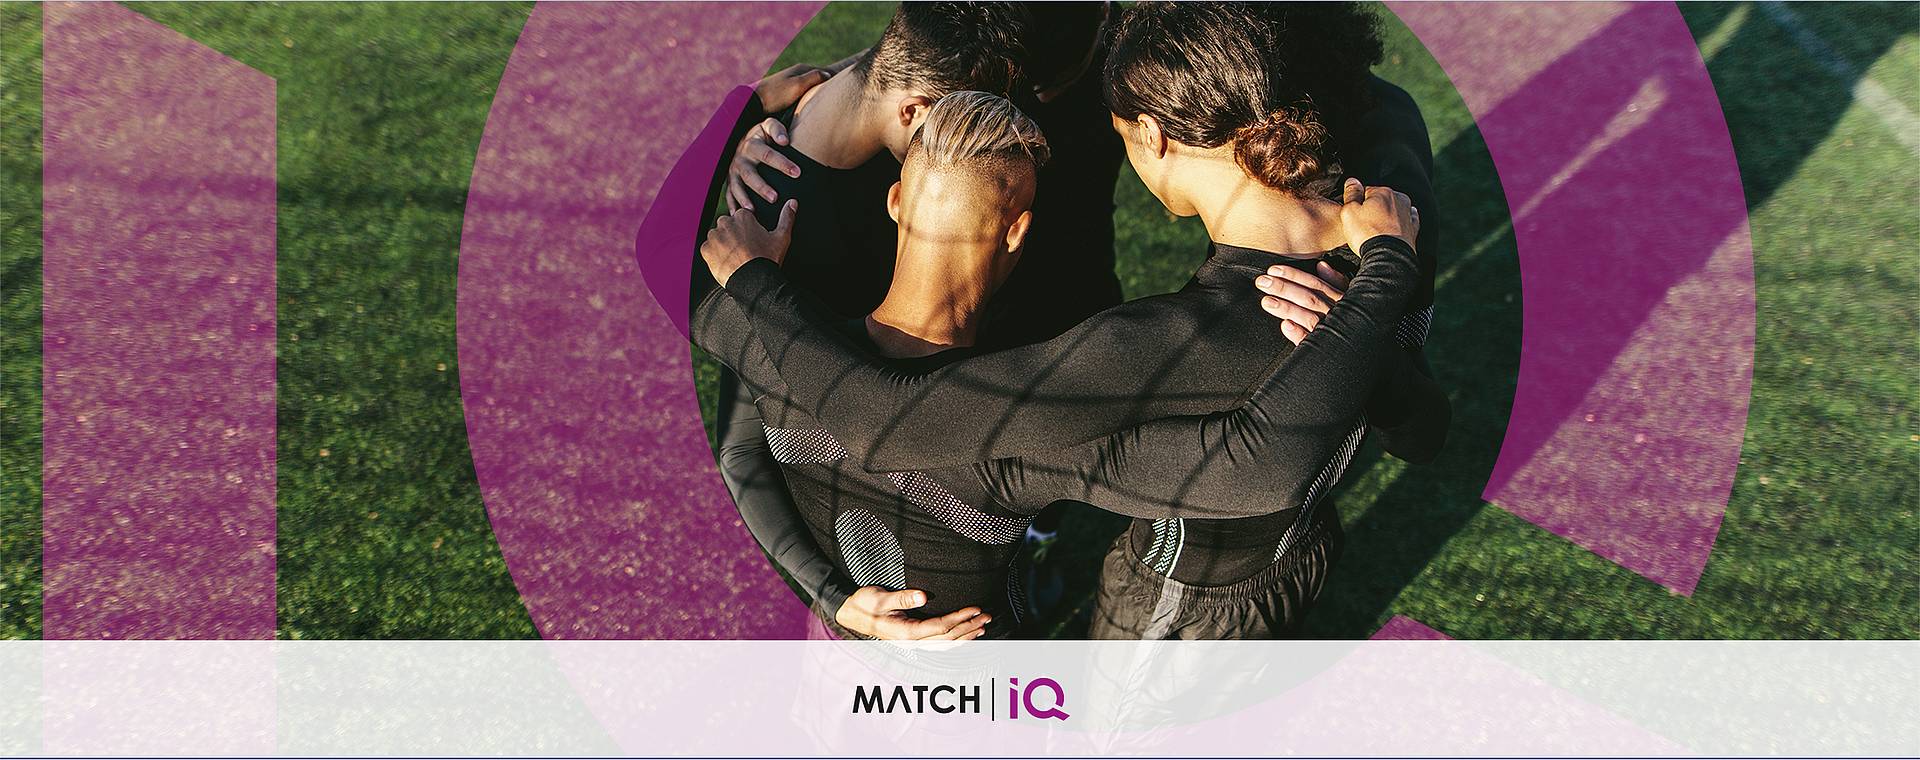 Match IQ header image